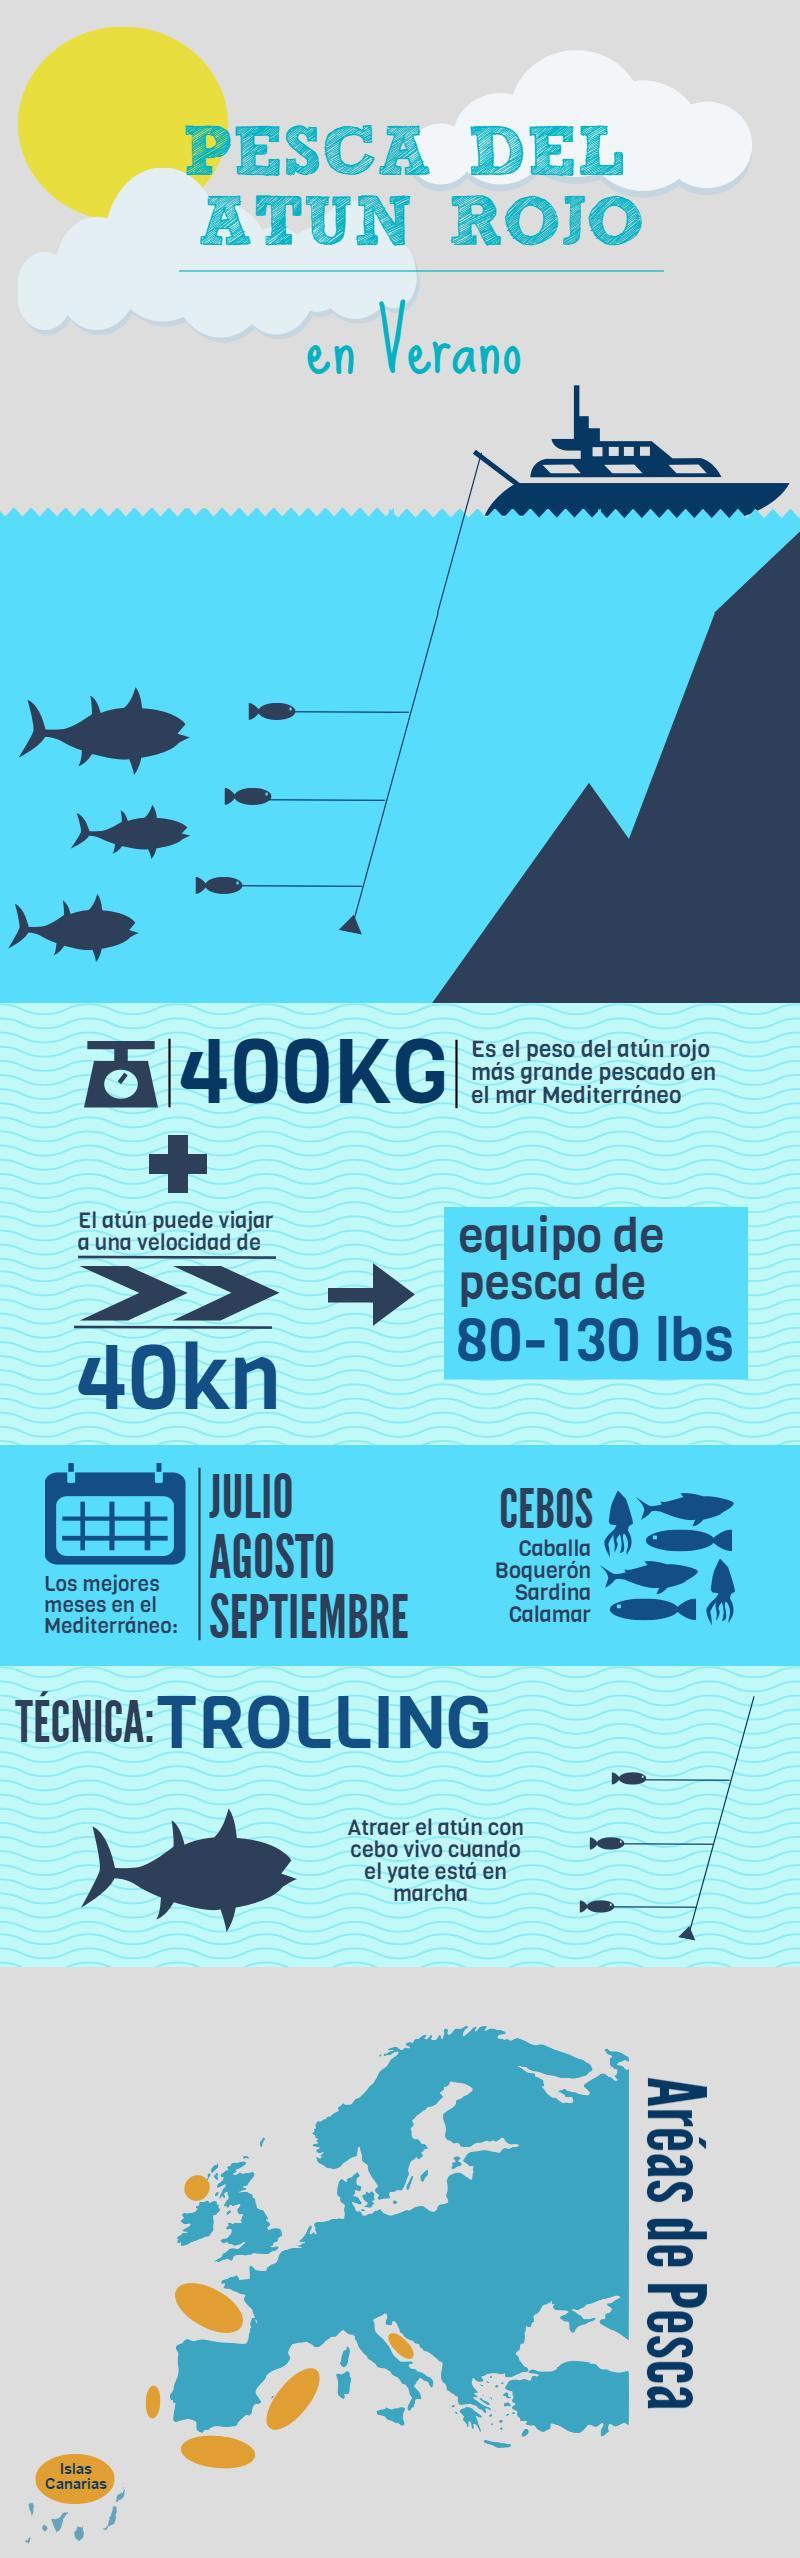 Infografia temporada pesca del atún rojo